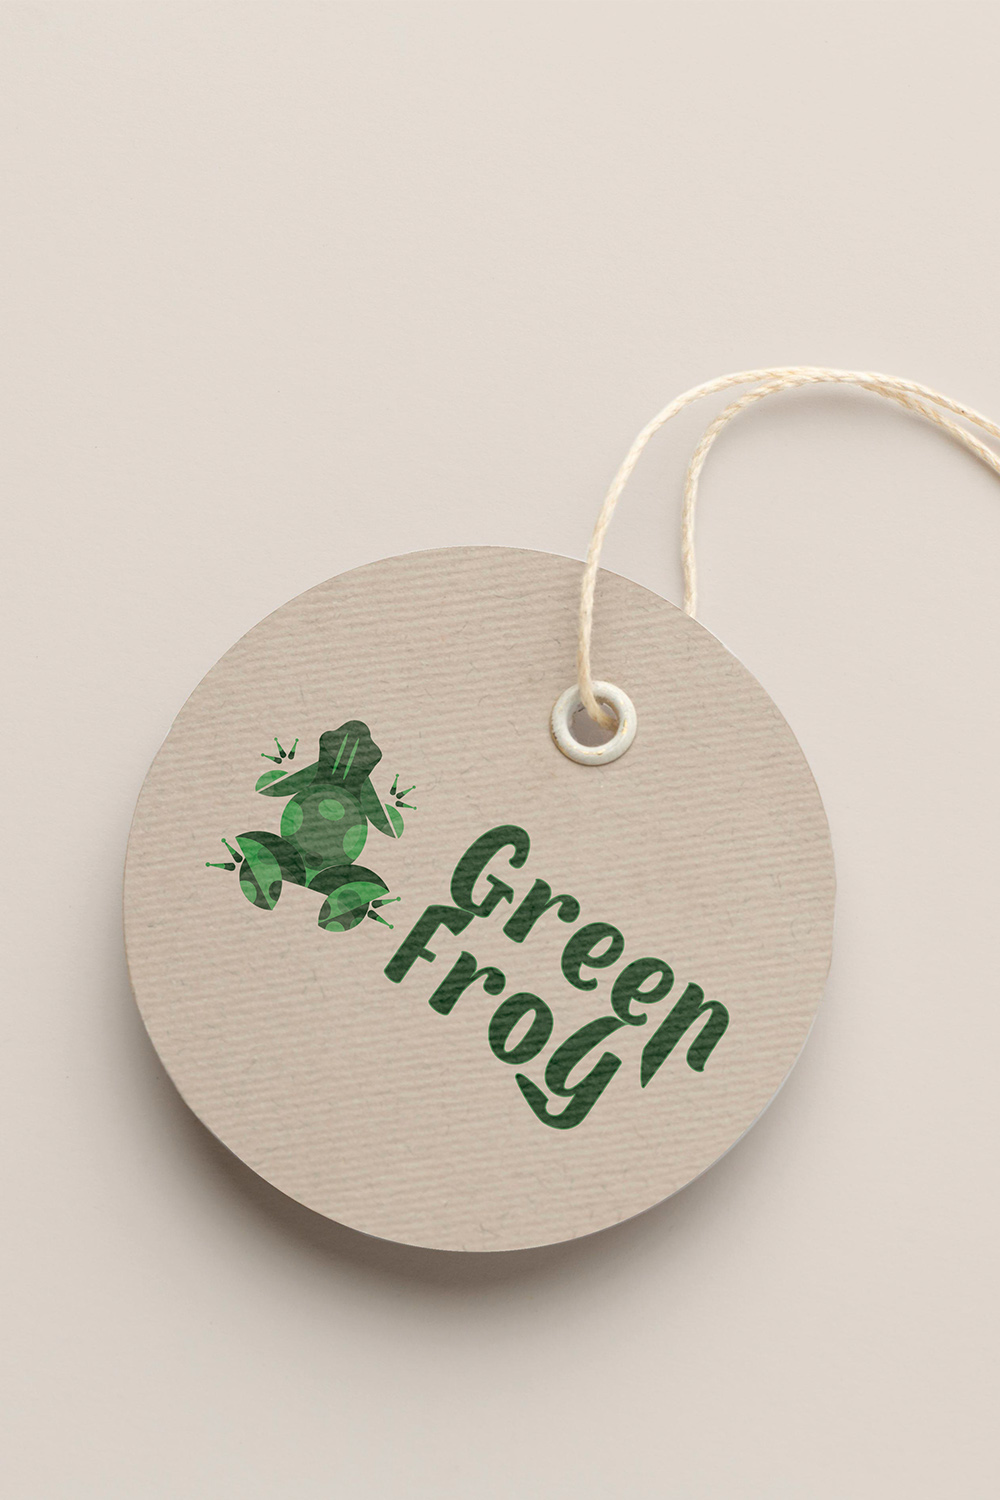 logo green frog vector art pinterest preview image.